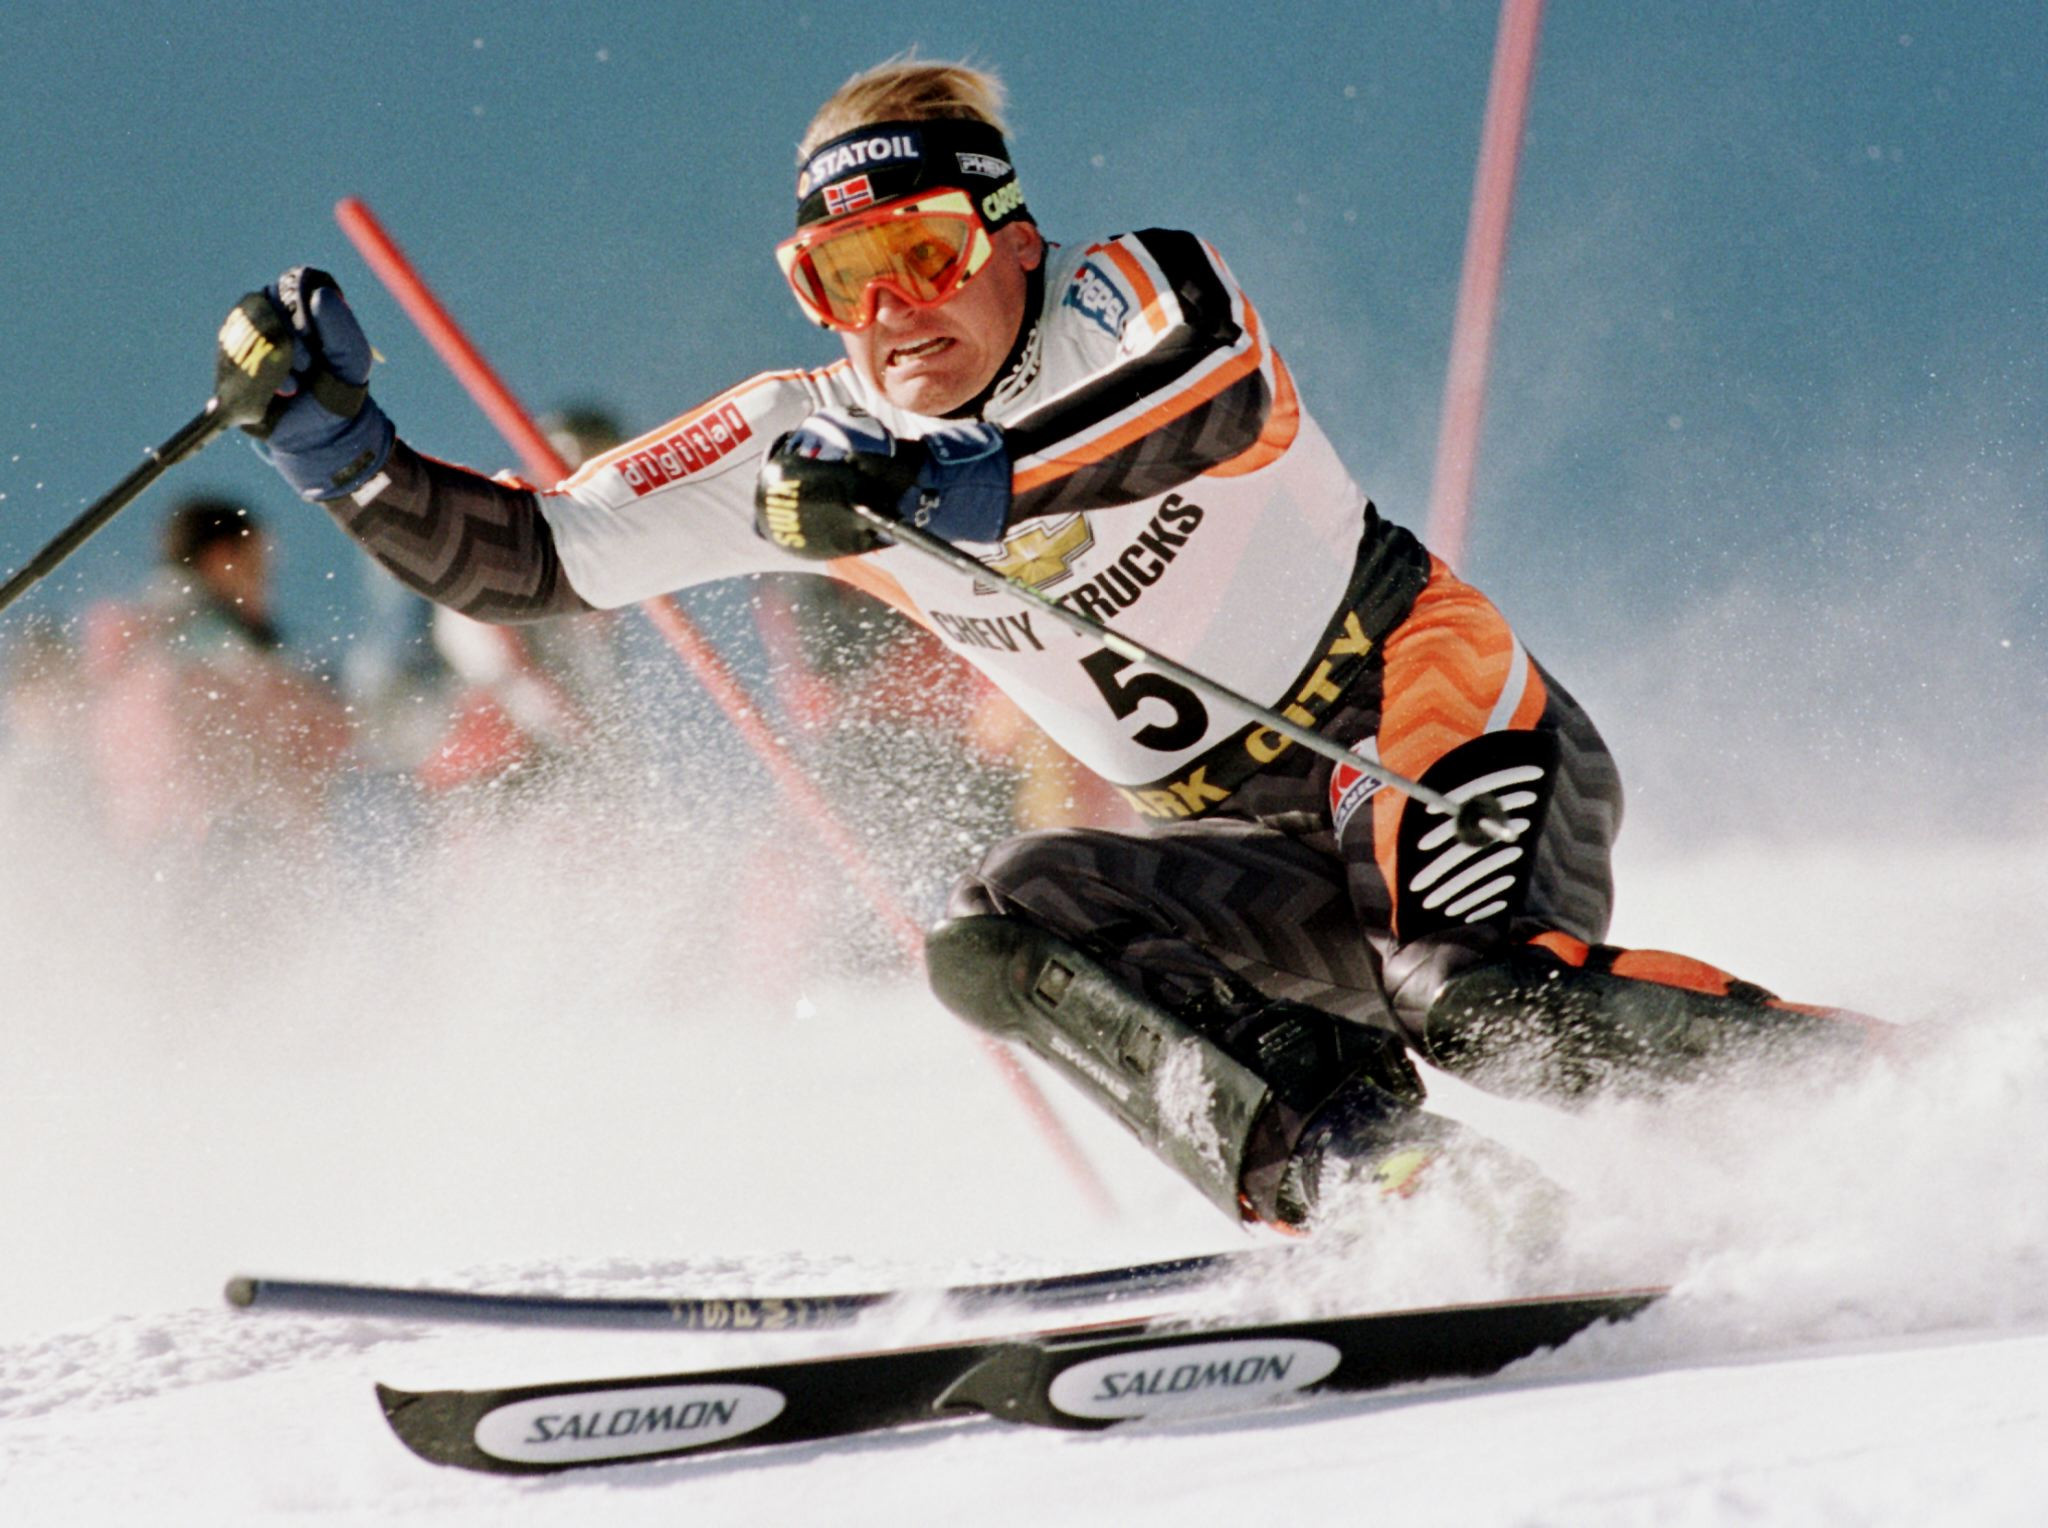 Albertville 1992 Olympic slalom champion Jagge dies at 54